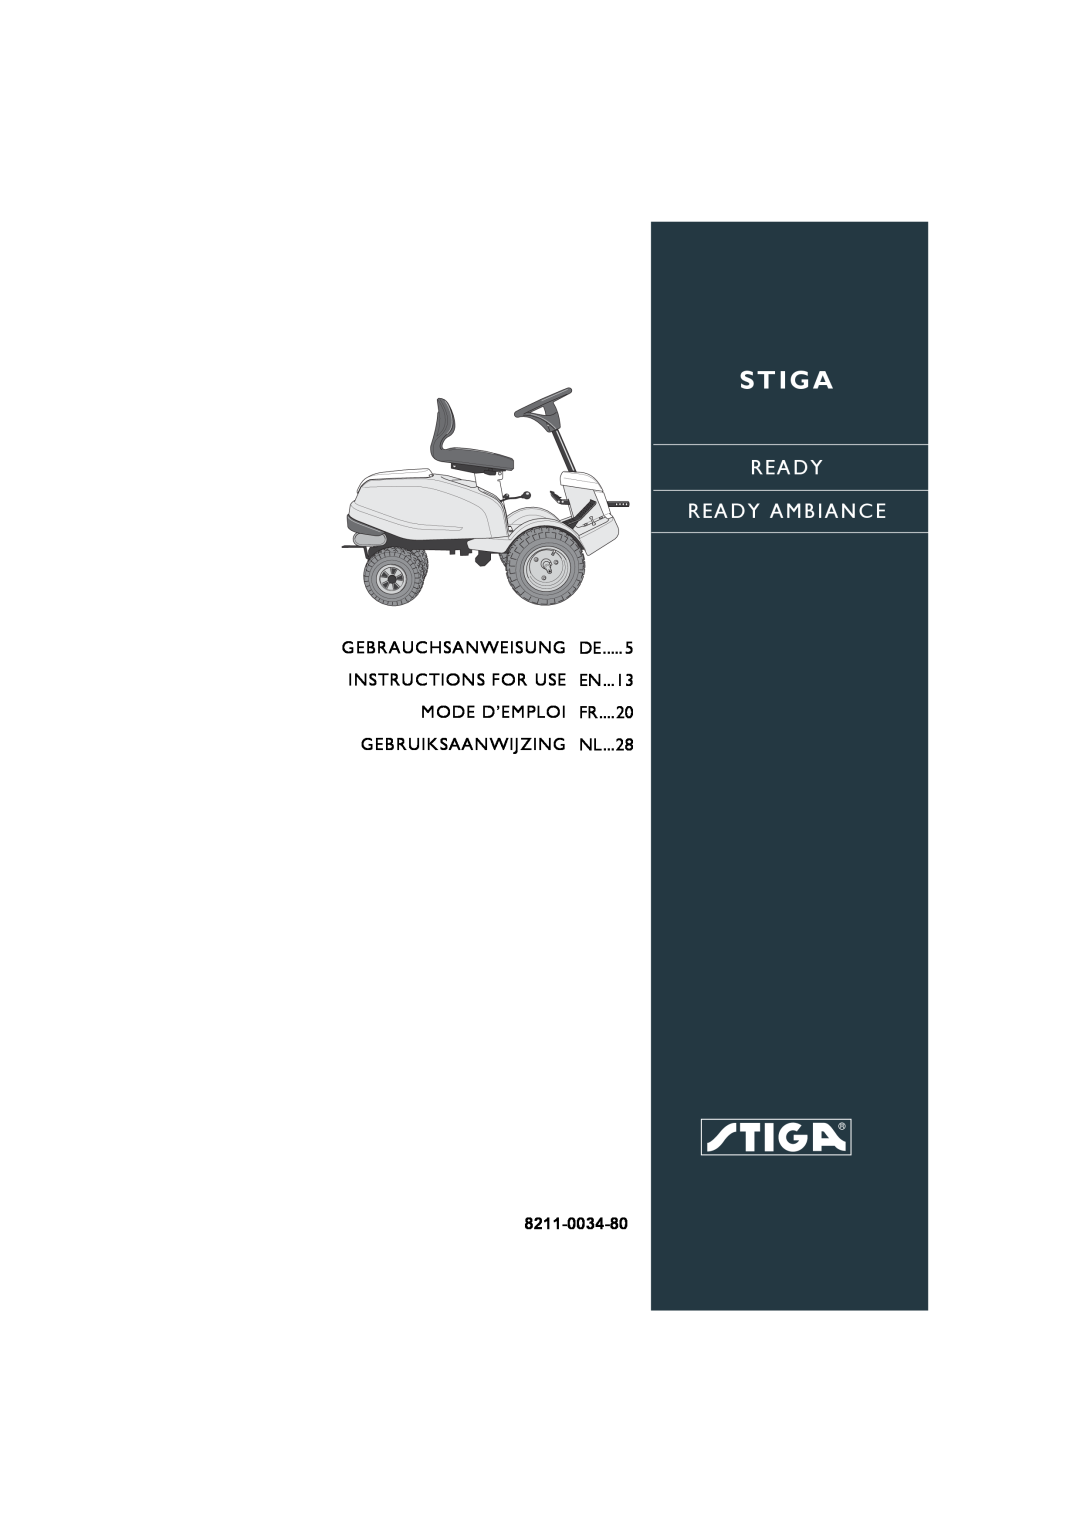 Stiga 8221-0034-80 manual Stiga, Ready Ready Ambiance, Gebrauchsanweisung, Instructions For Use, Mode D’Emploi 